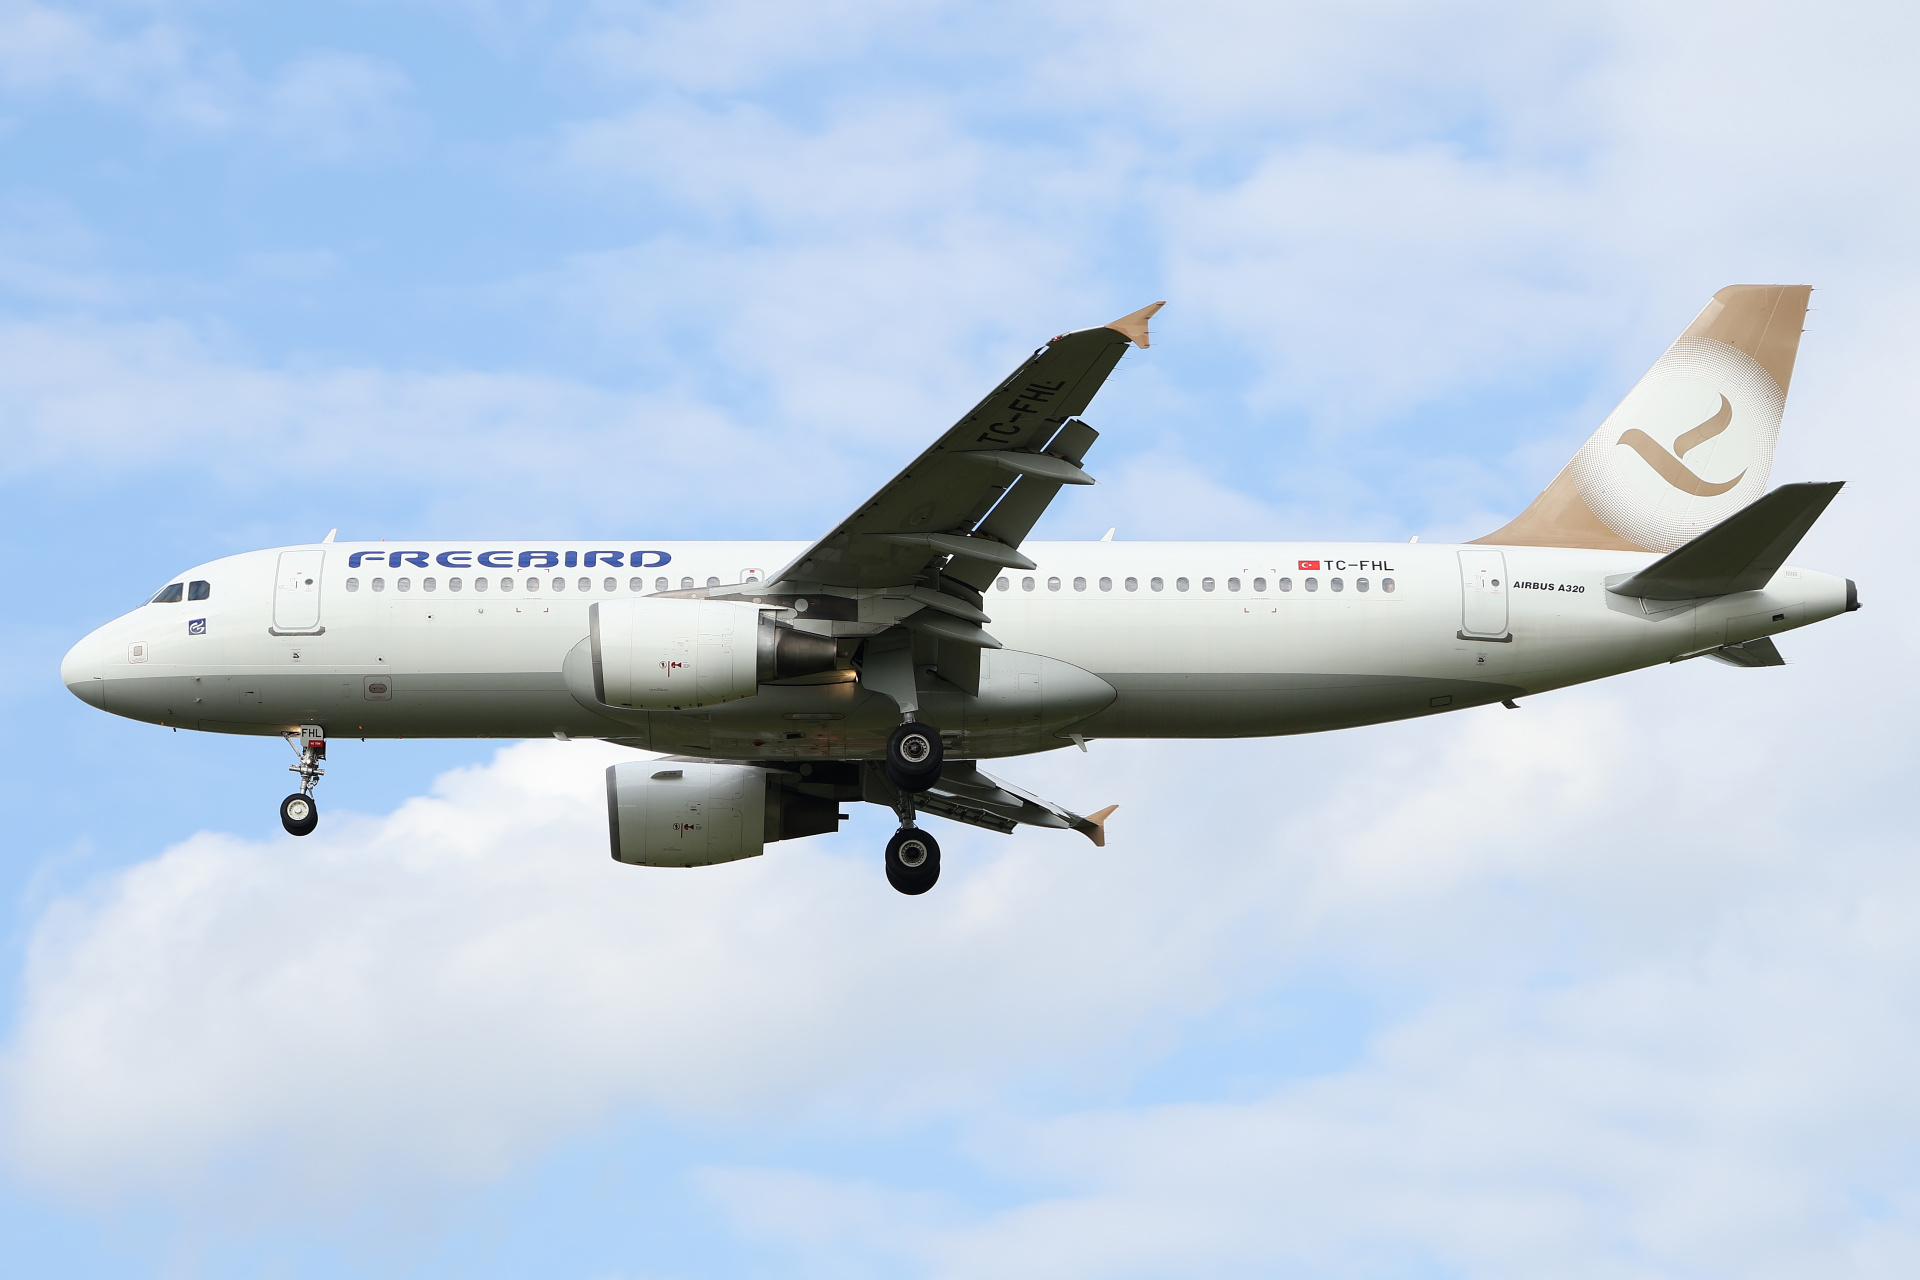 TC-FHL, Freebird Airlines (Aircraft » EPWA Spotting » Airbus A320-200)